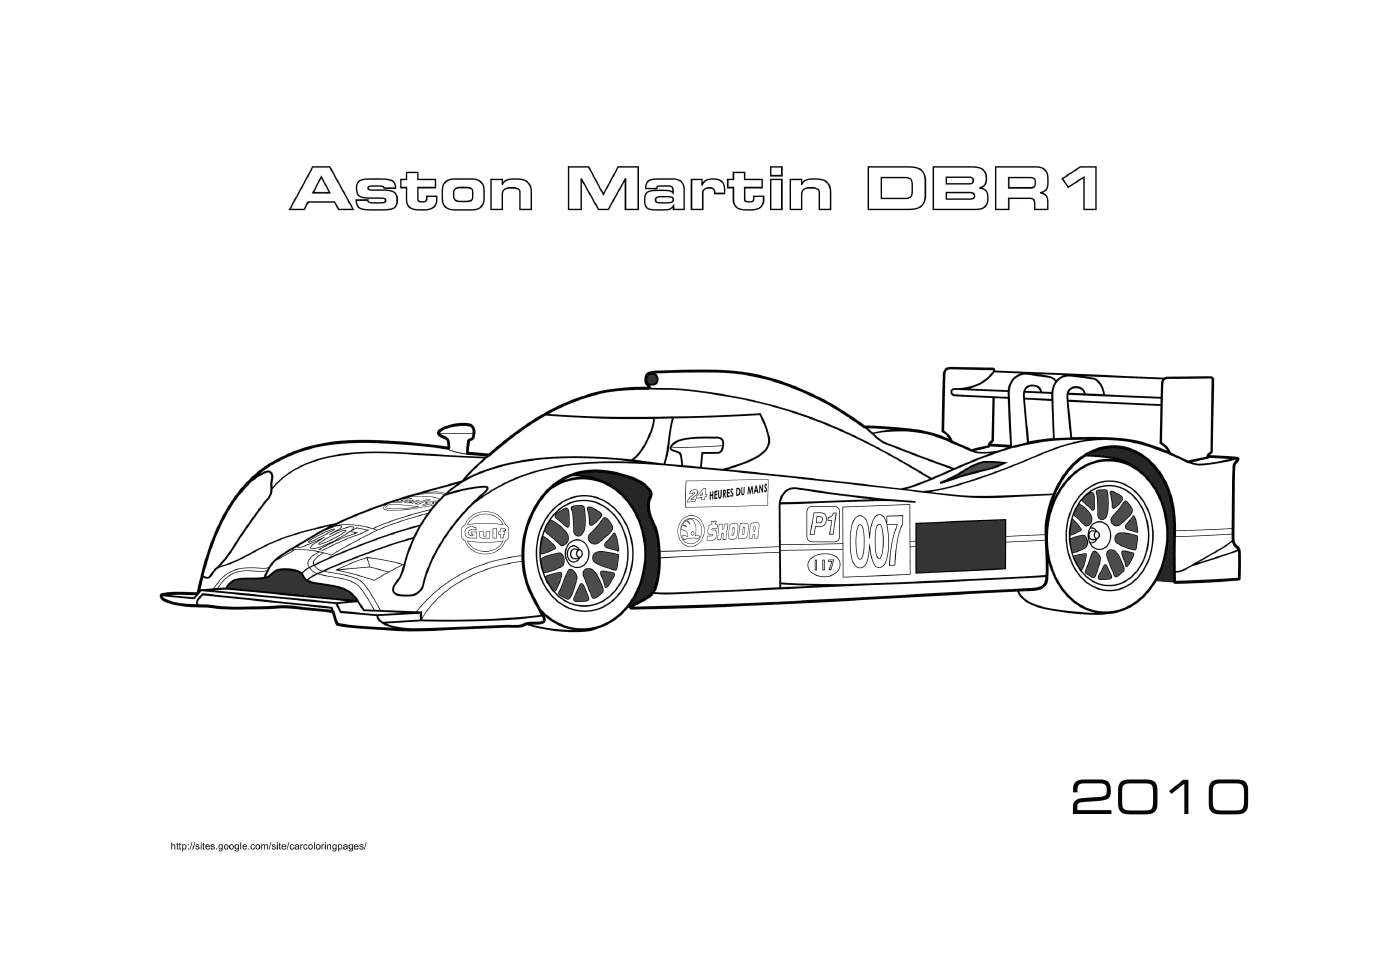   Voiture de course Aston Martin DBR1 2010 